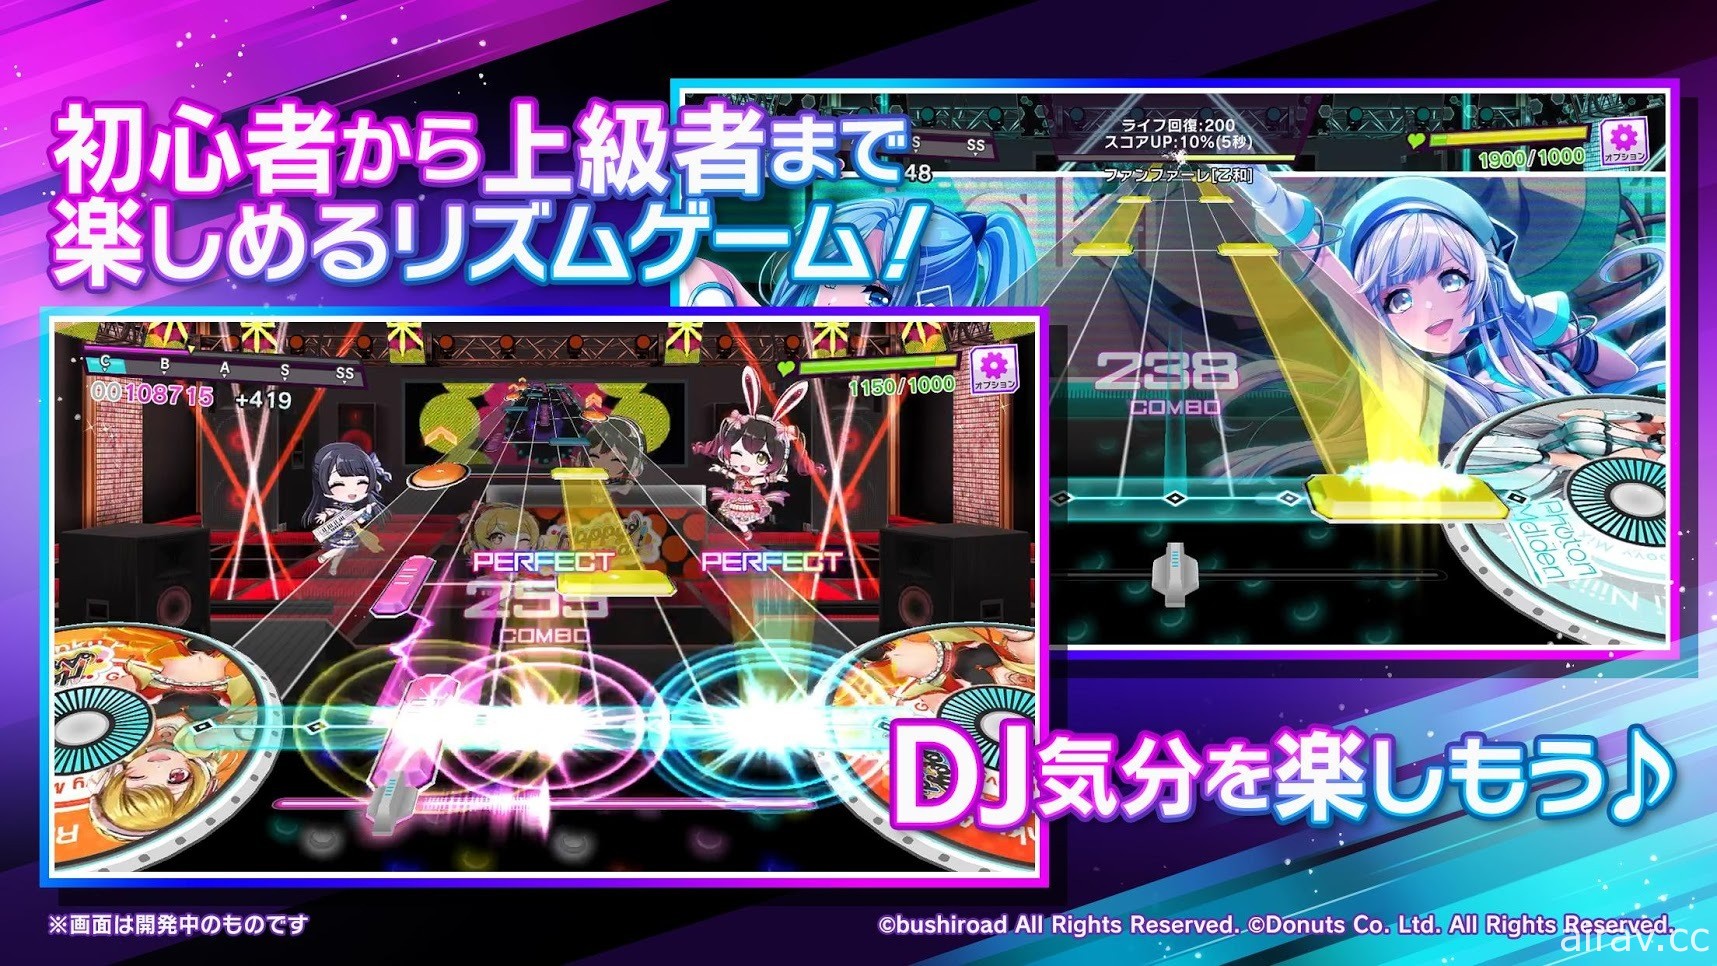 DJ 題材節奏遊戲新作《D4DJ Groovy Mix》於日本雙平台商店開啟預約